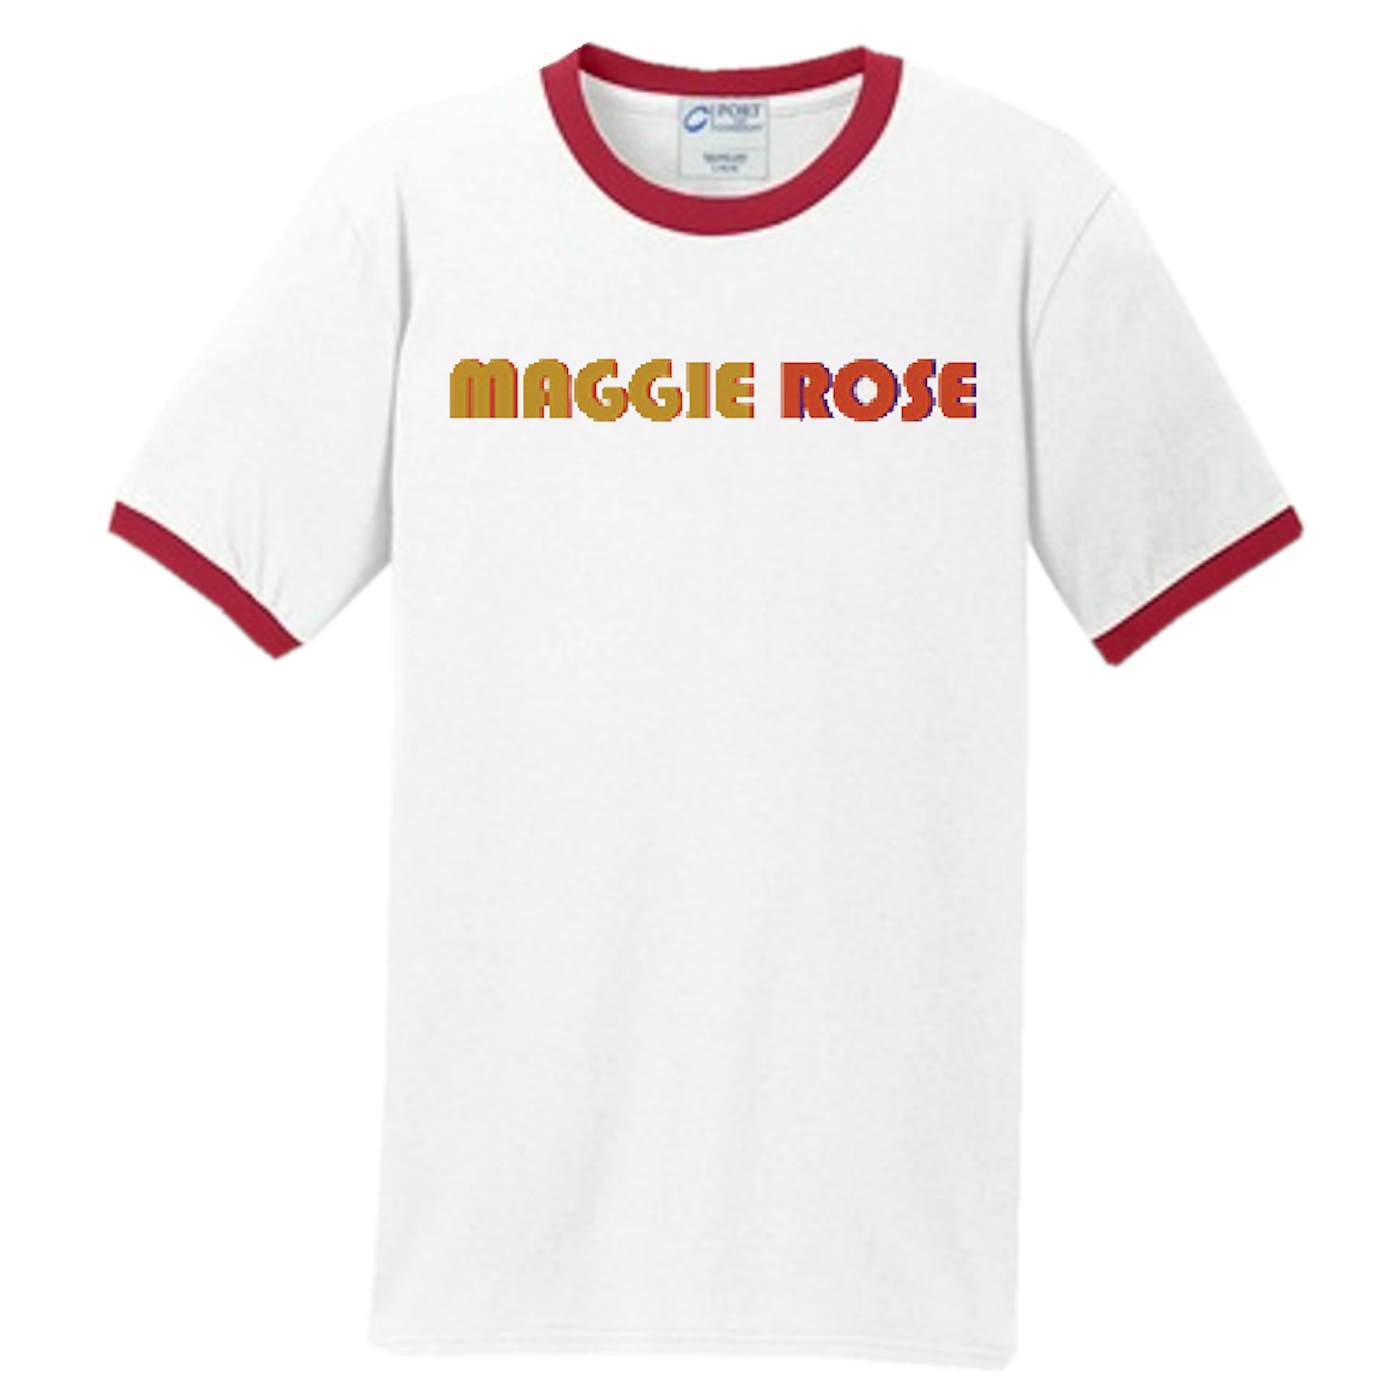 Maggie Rose 8-BIT RINGER